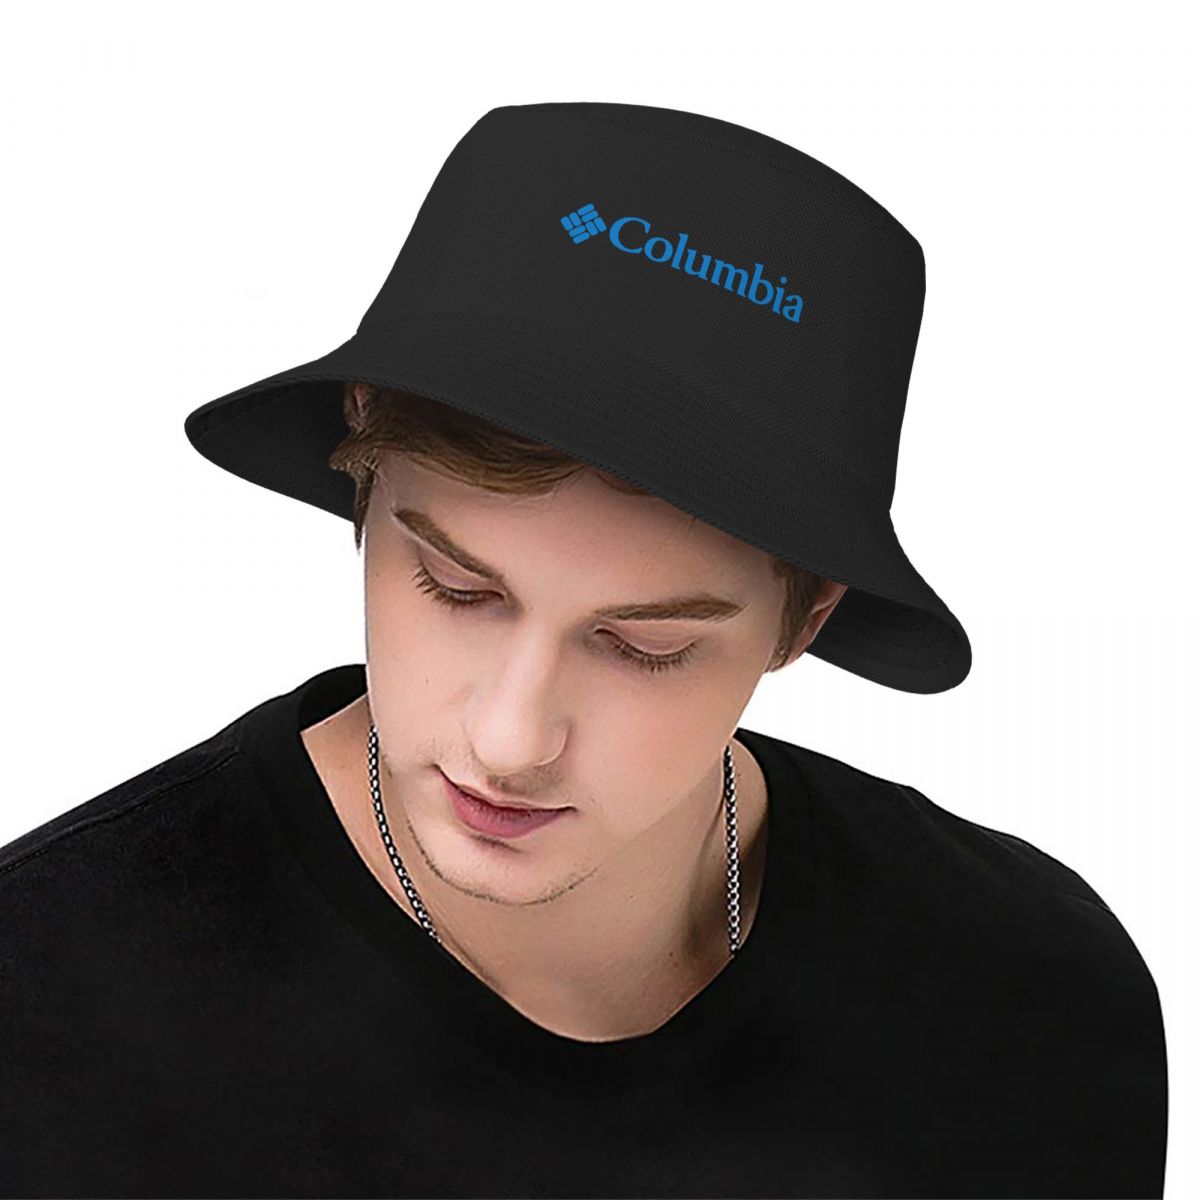 Columbia Bucket Hat Print Fisherman Hat Cotton Sun Fishing Cap Fun  Lightweight for Travel